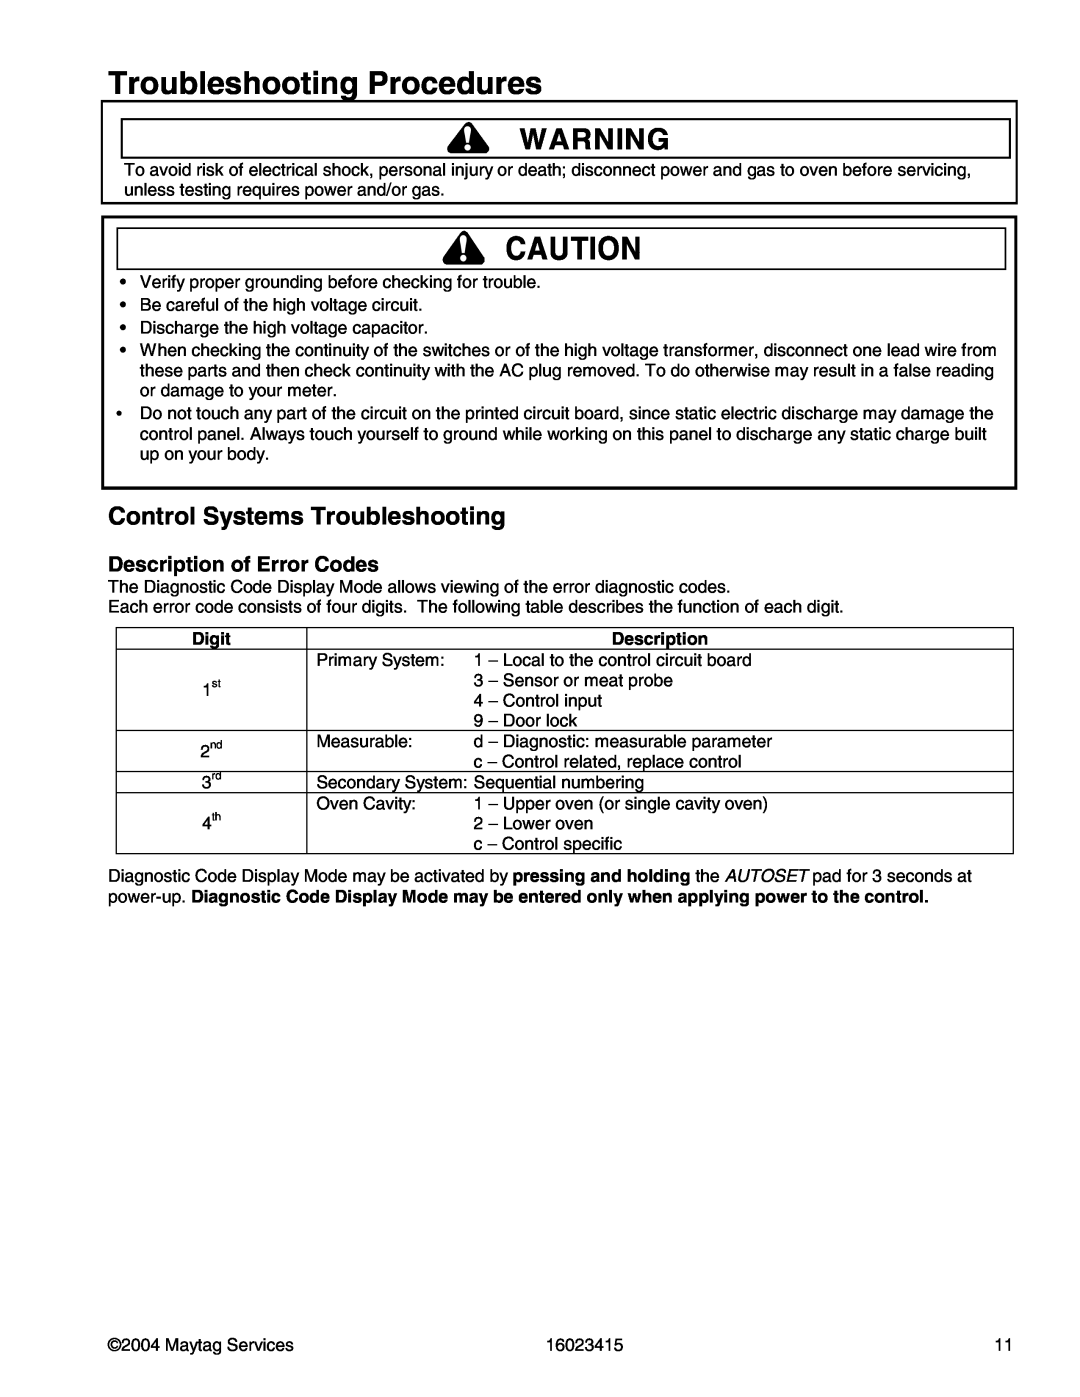 Maytag MGR6775ADB/Q/S/W Troubleshooting Procedures, Control Systems Troubleshooting, Description of Error Codes, Digit 